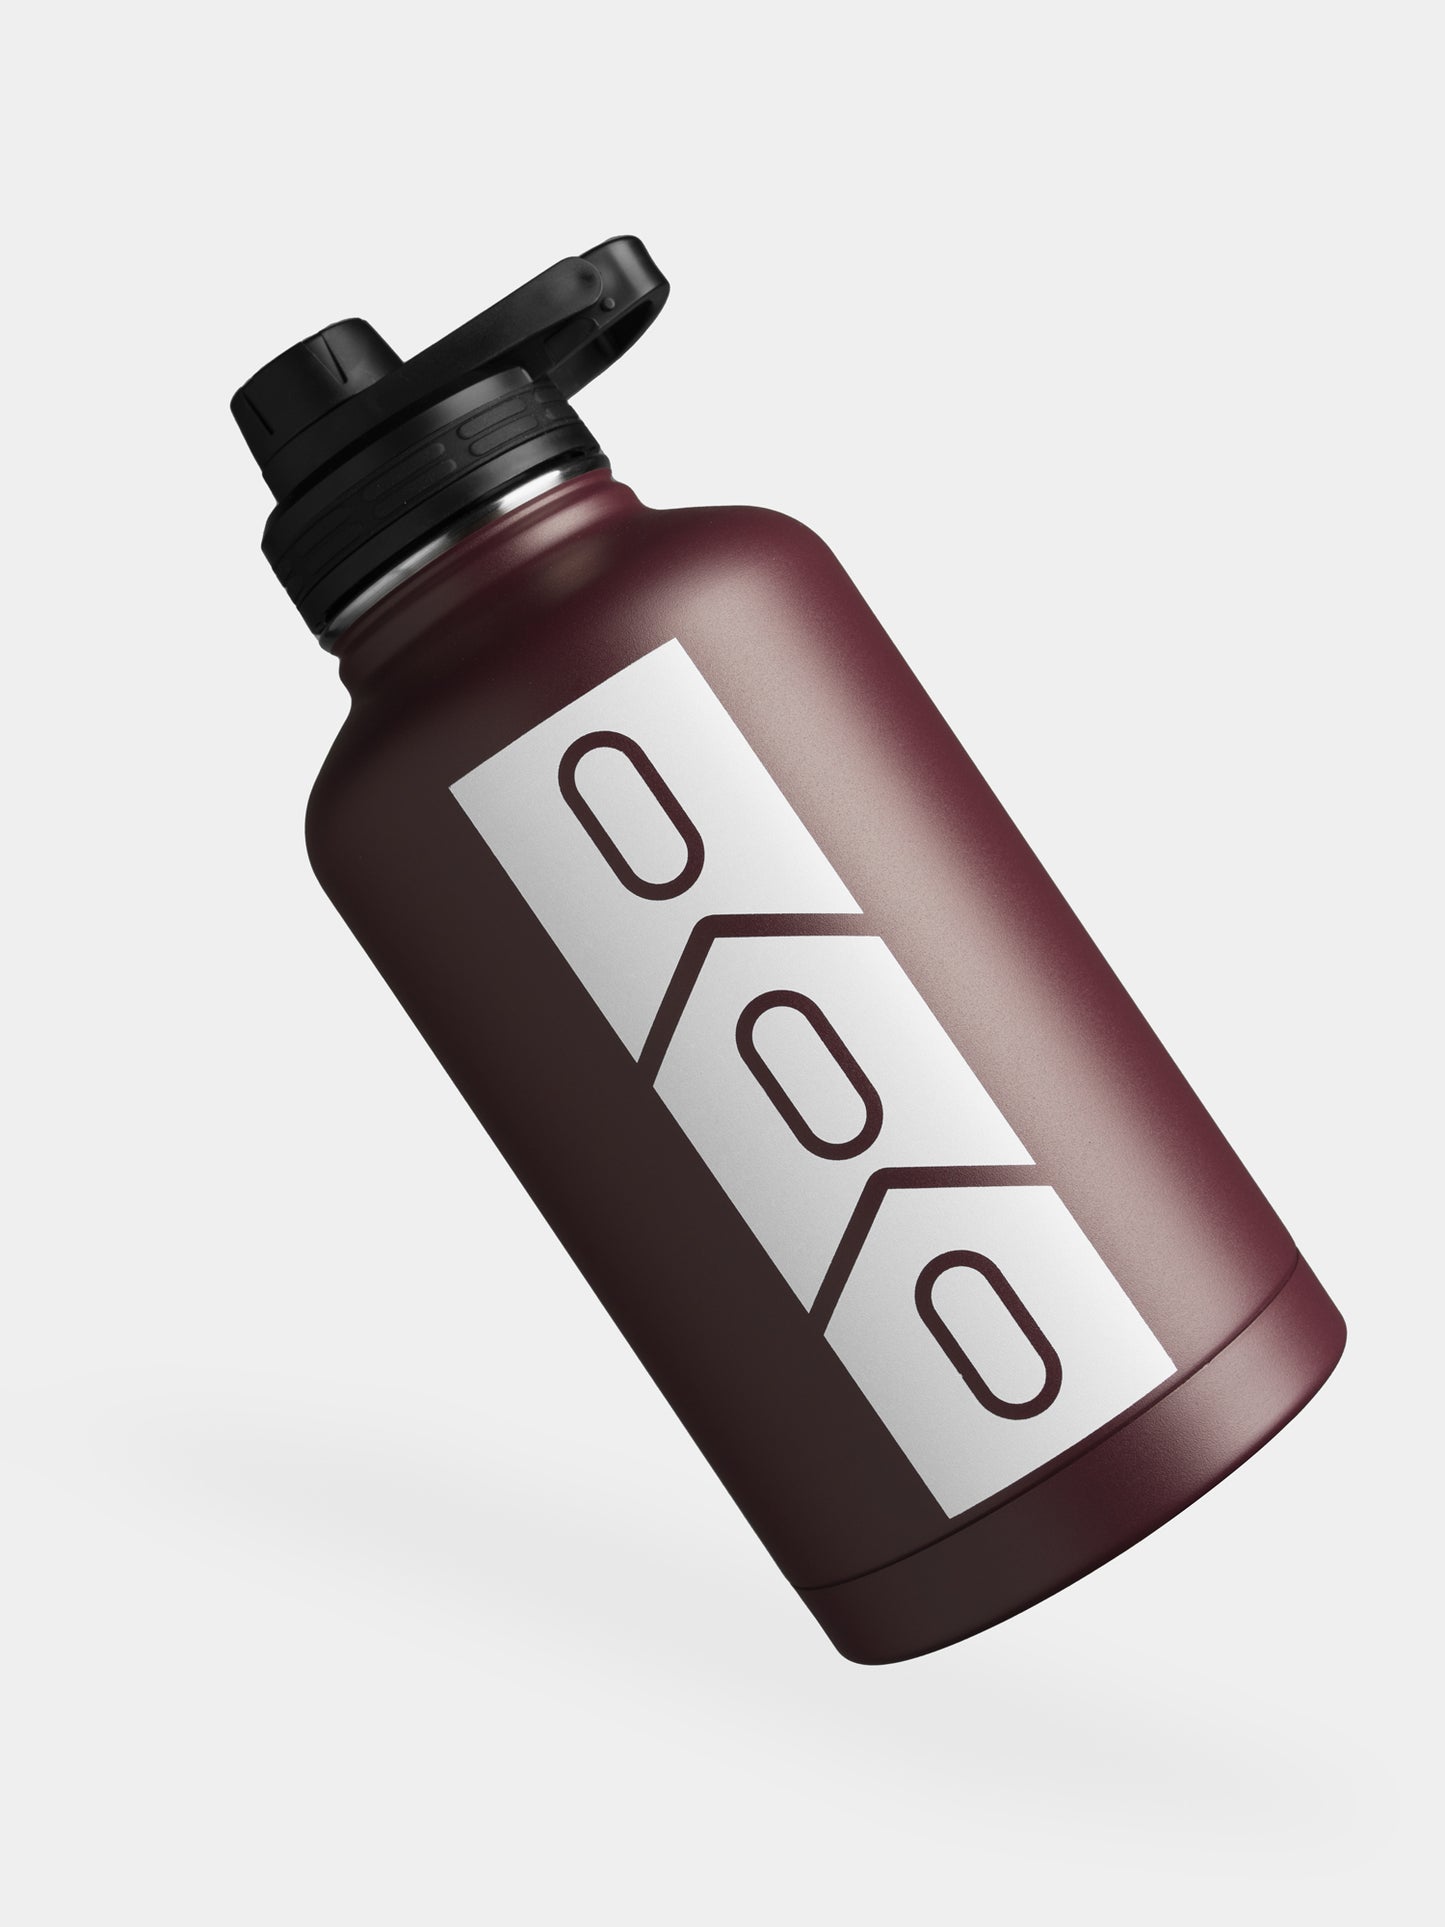 Simple Modern 64 Fluid Ounces Plastic Summit Water Bottle with Straw Lid  -Sorbet